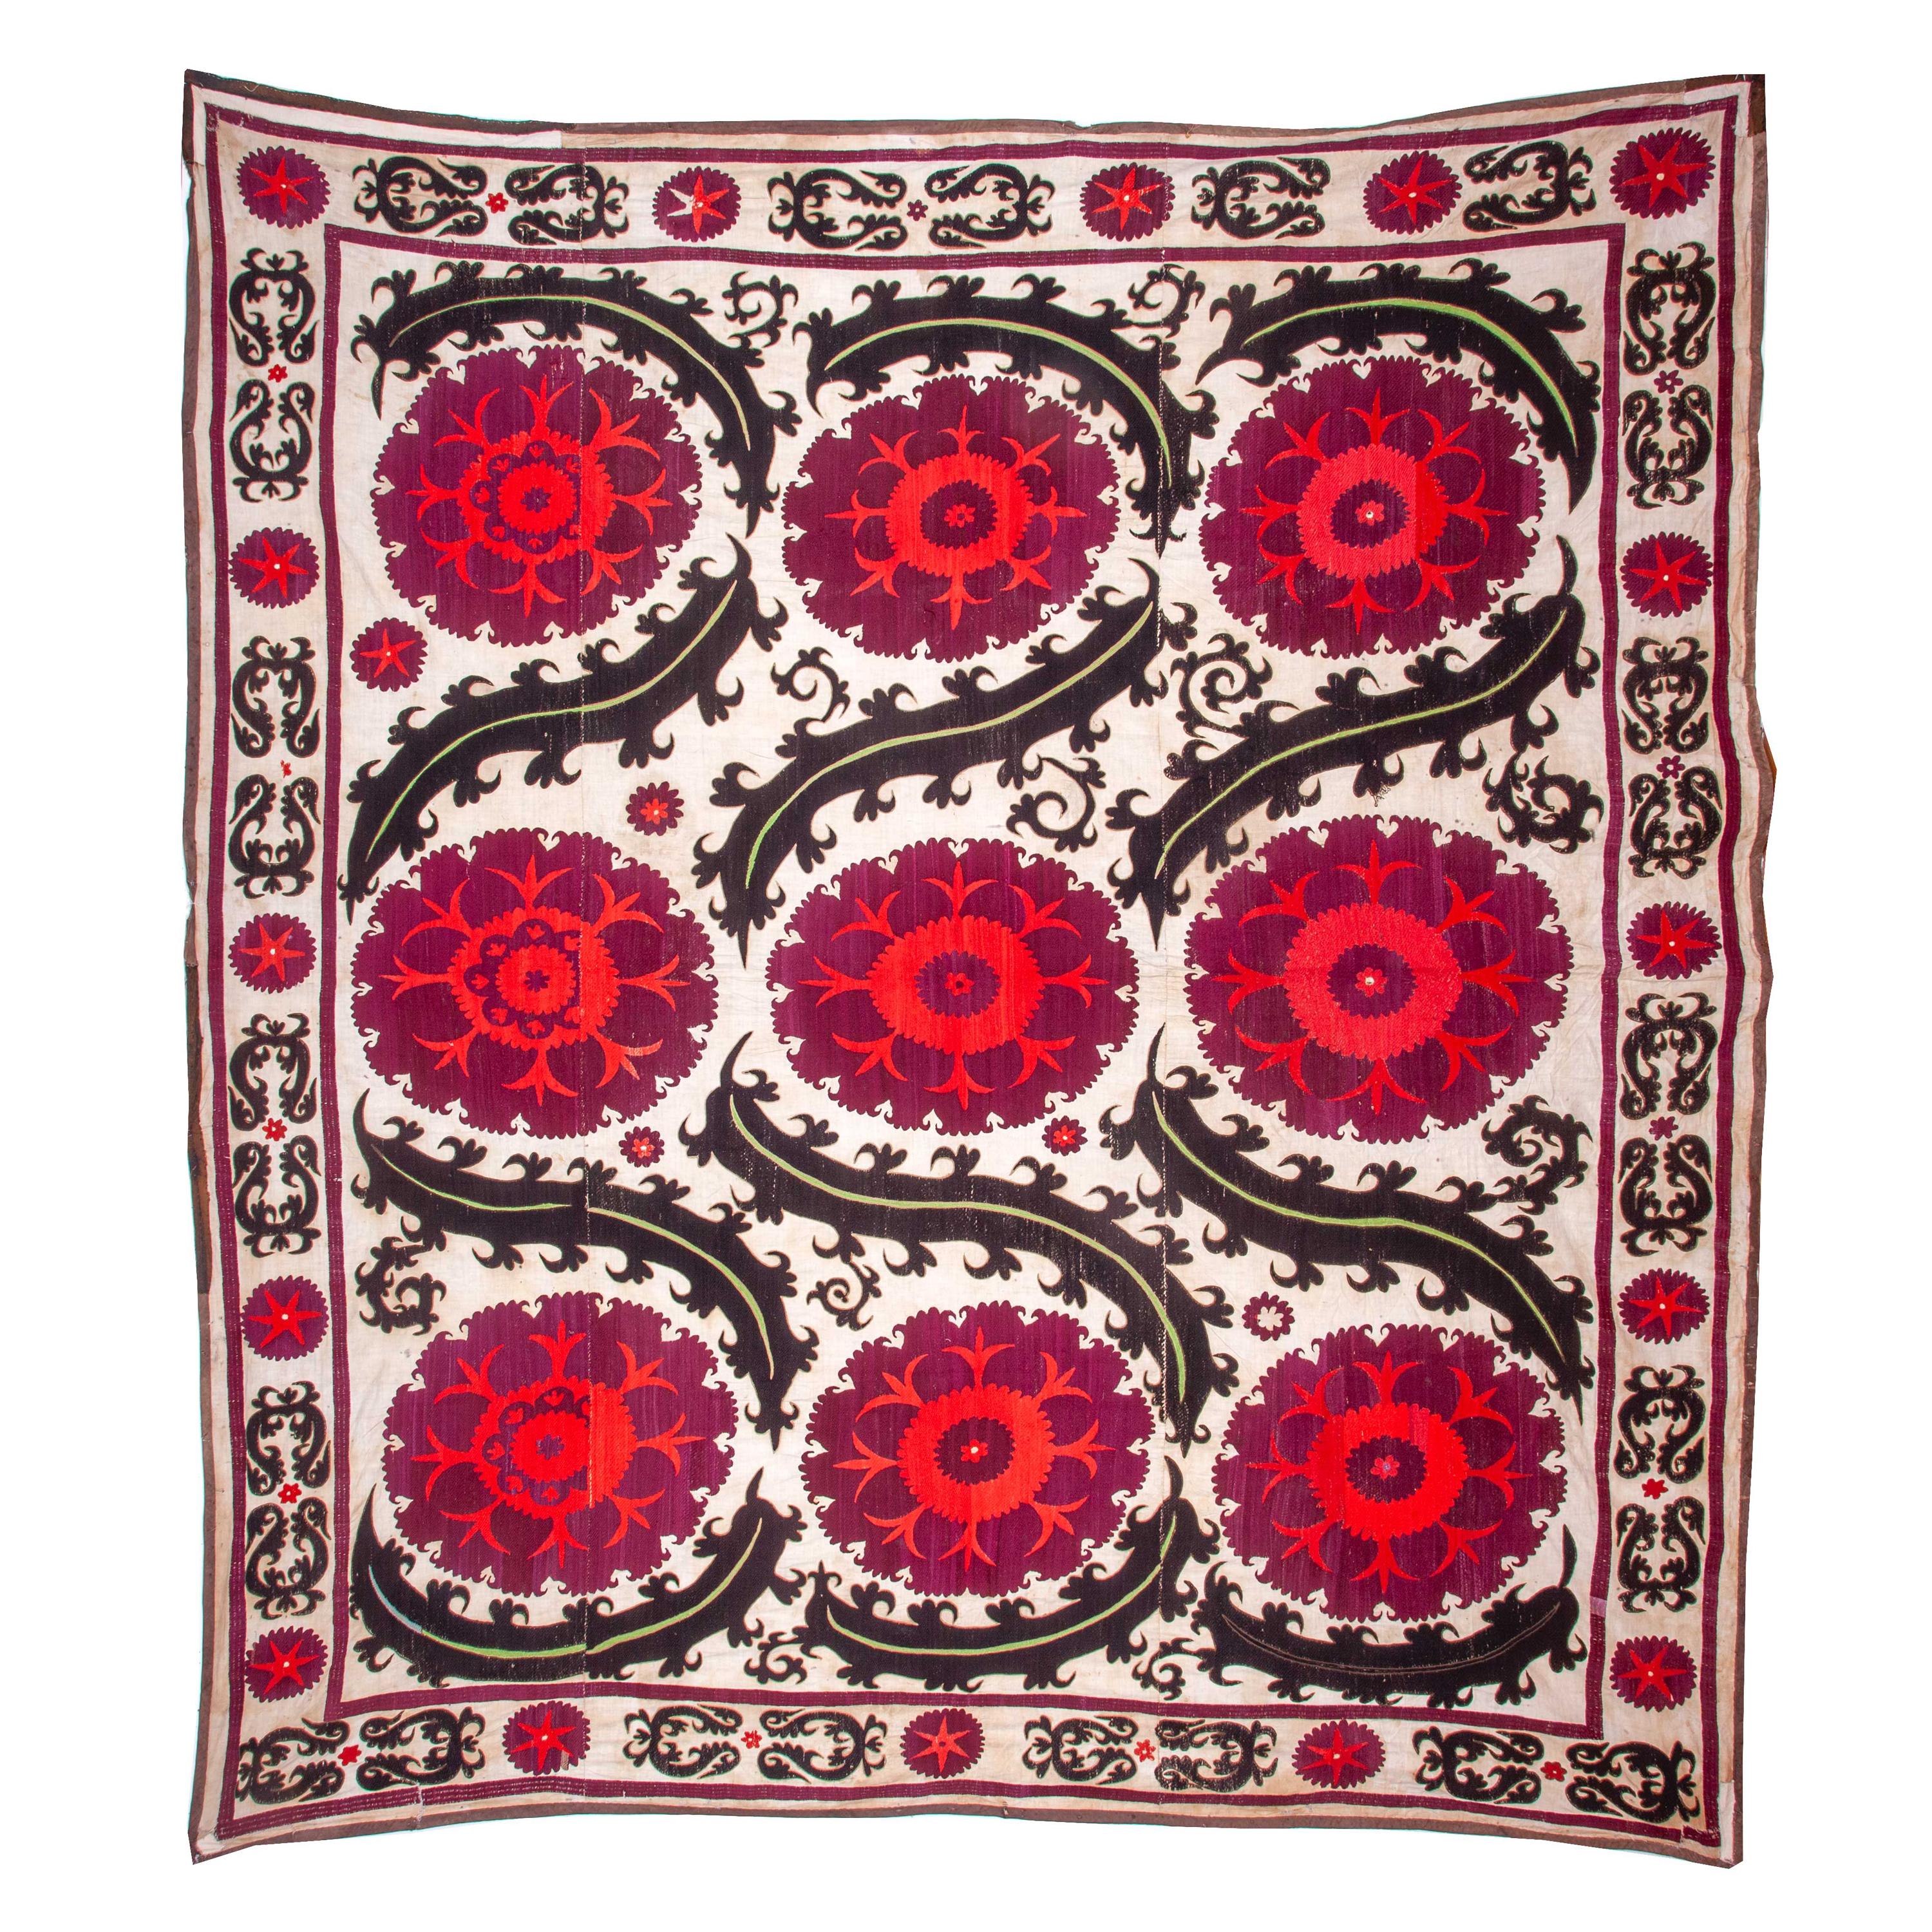 Silk Embroidered Suzani from Samarkand Uzbekistan, Early 20th Century